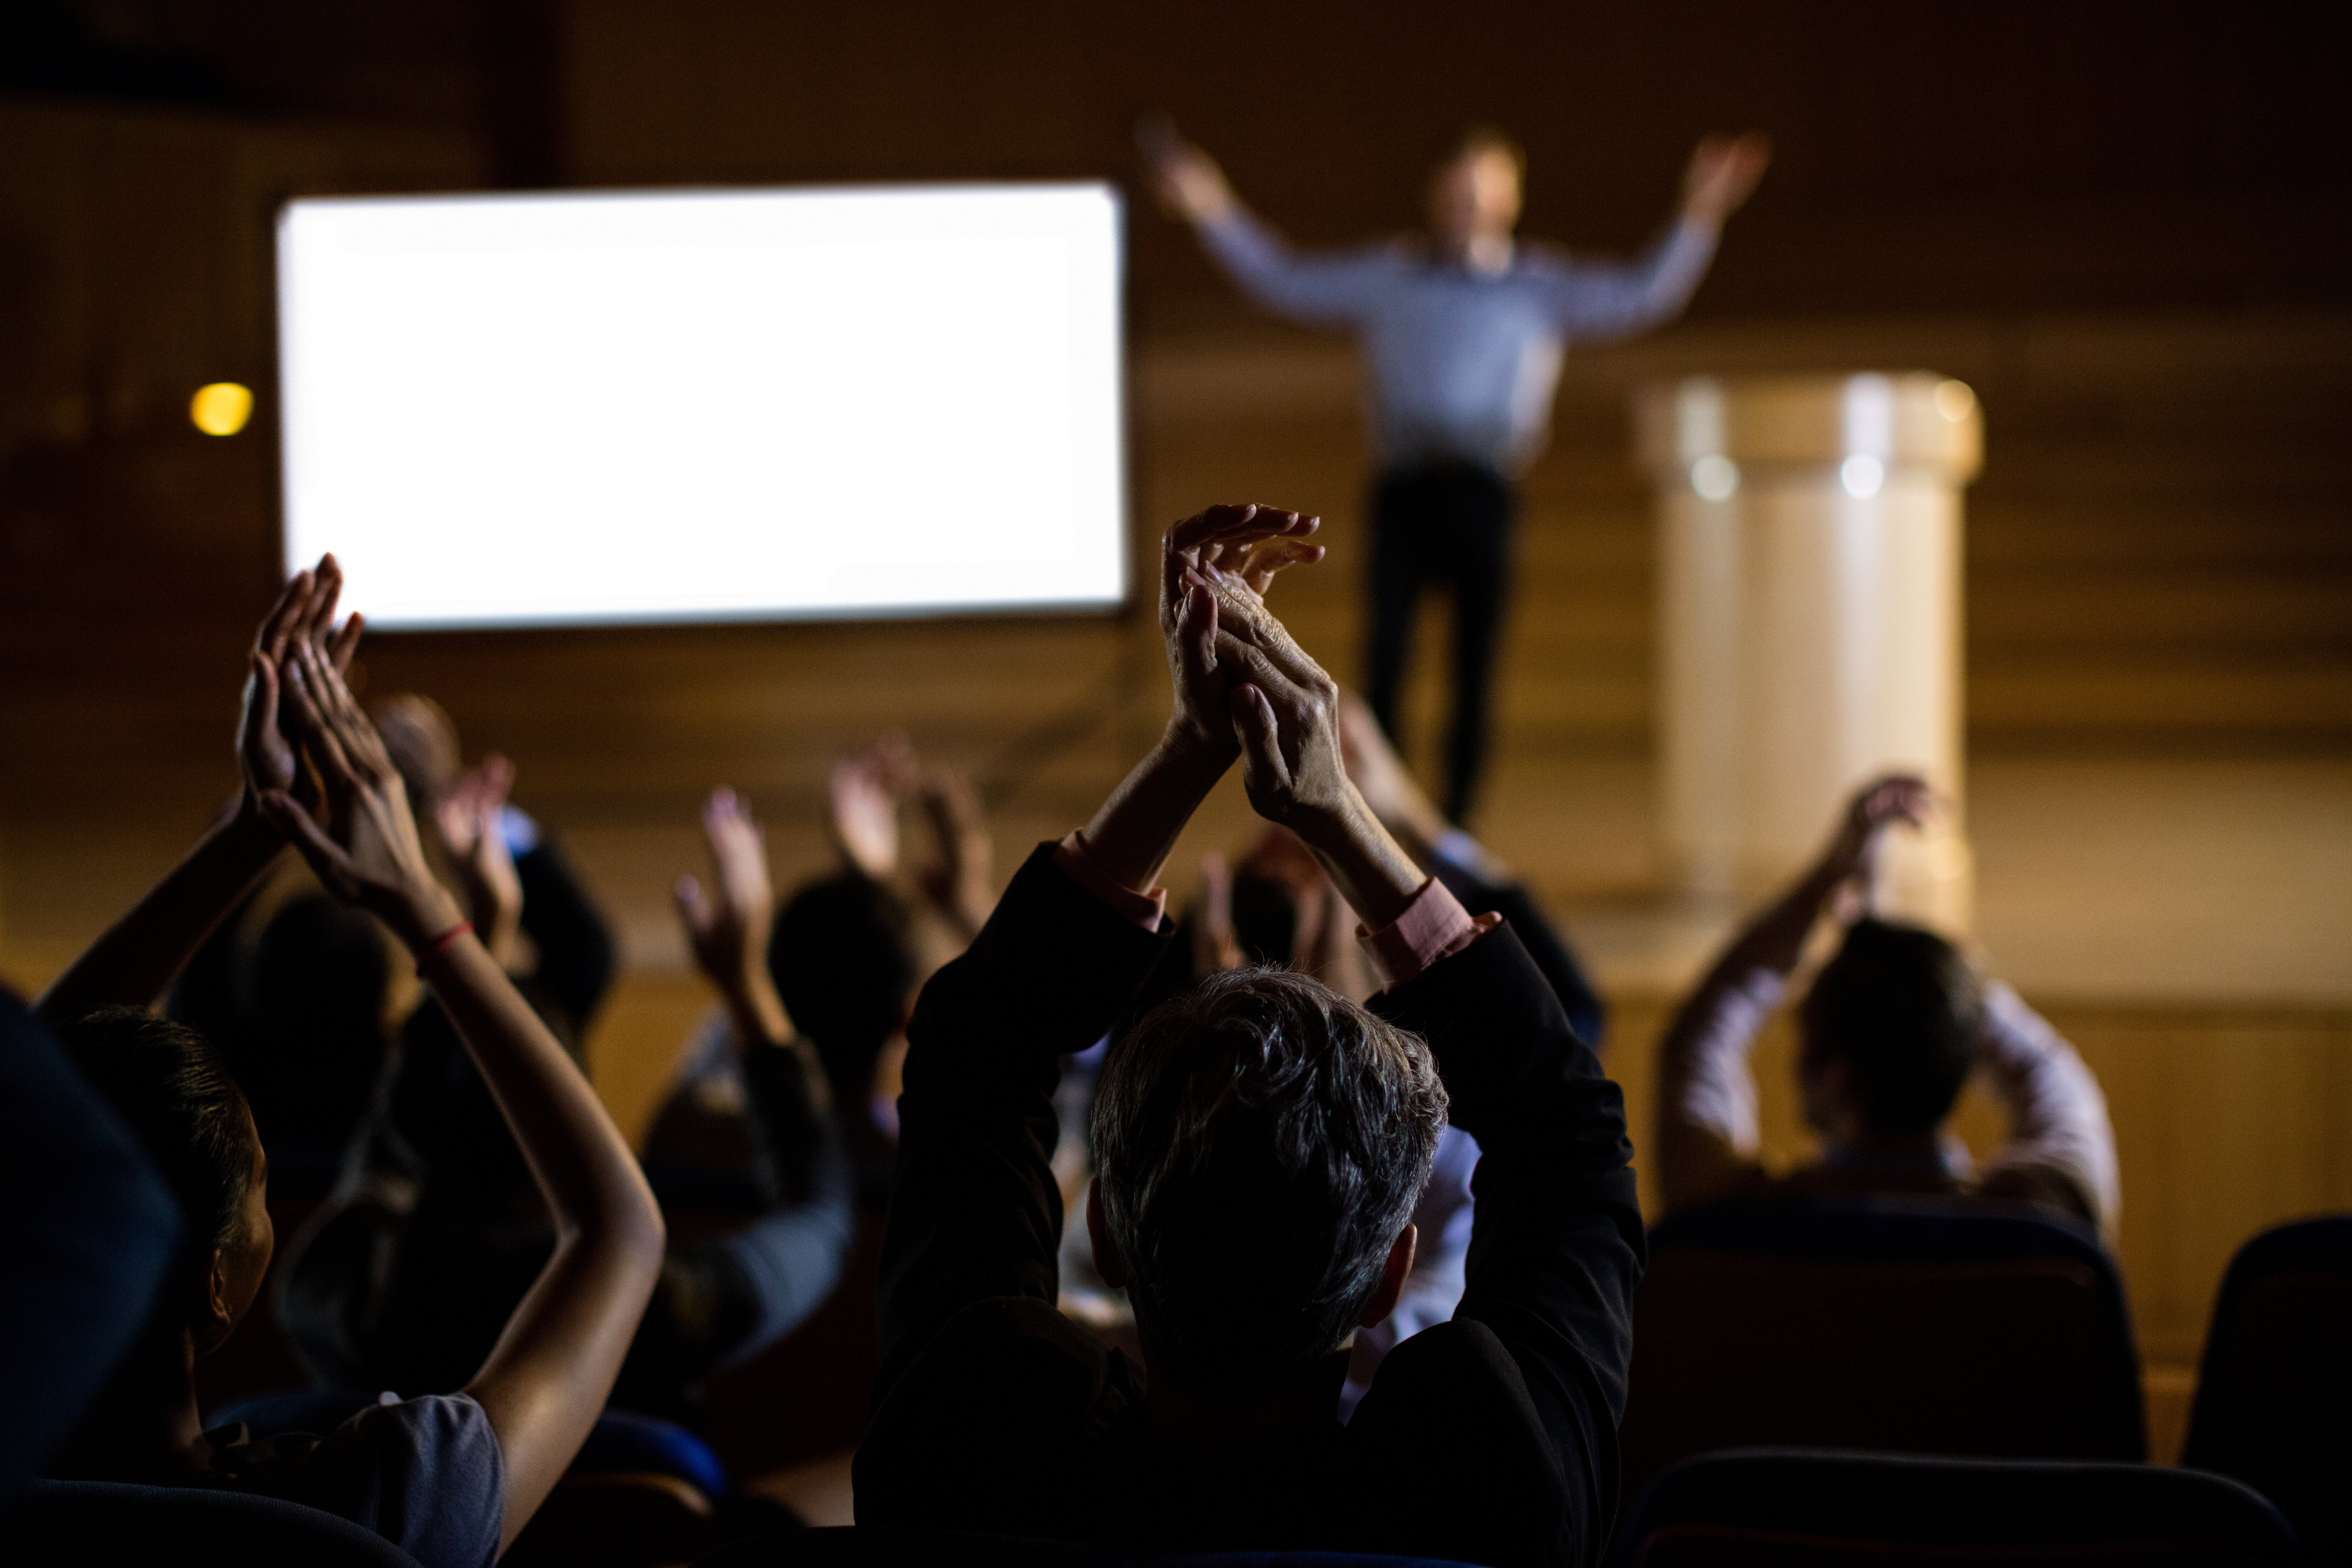 audience-applauding-speaker-after-conference-presentation